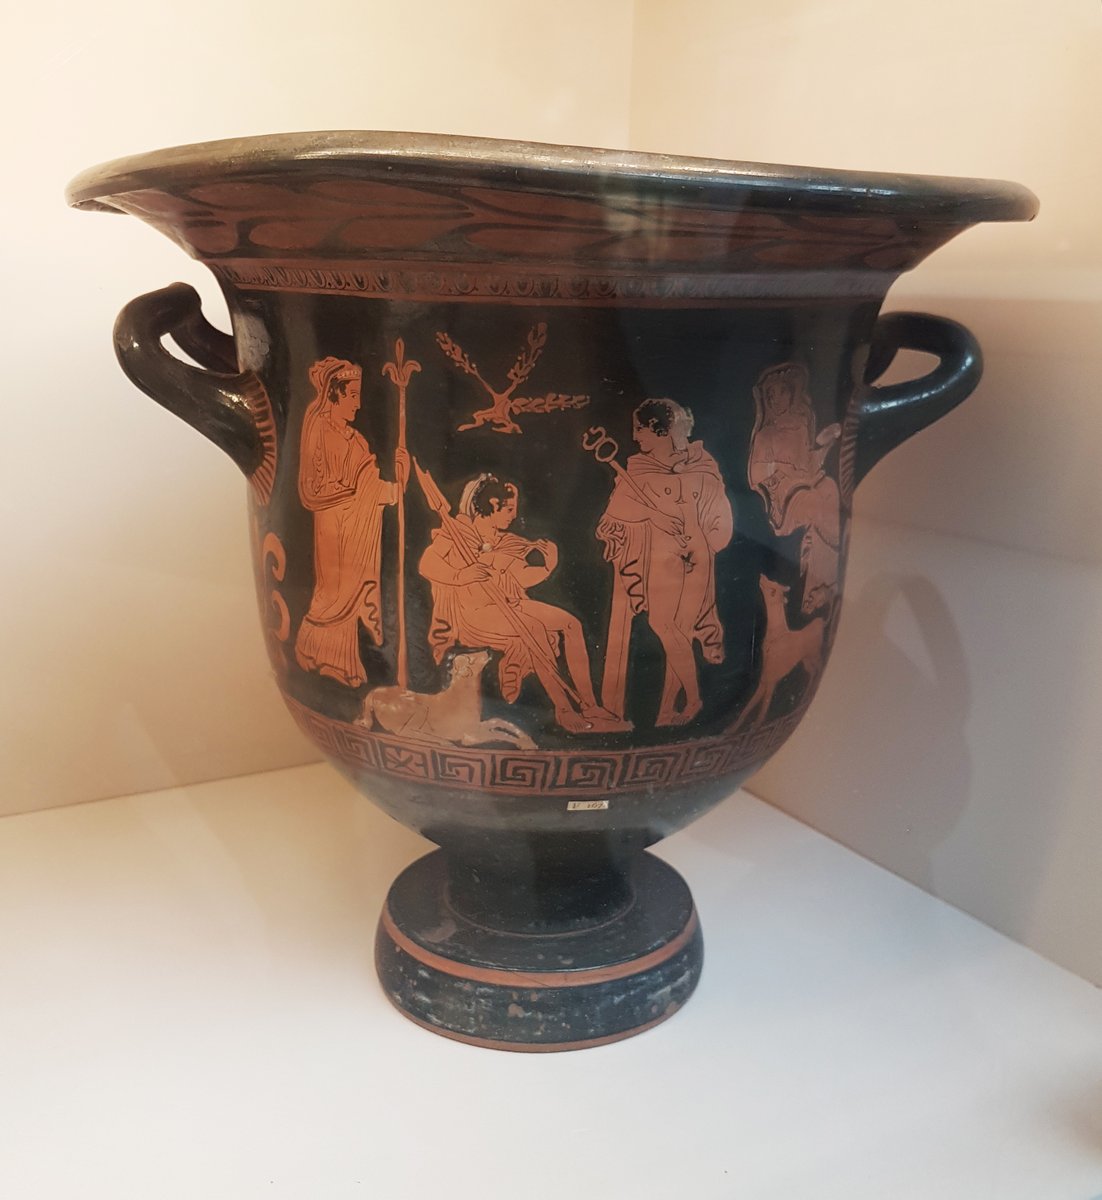 The Judgement of ParisRed-figure bell-krater, attributed to the Judgement Painter. Apulia, c. 350 BC.  @britishmuseum  #ceramics  #art  #mythology  #classics